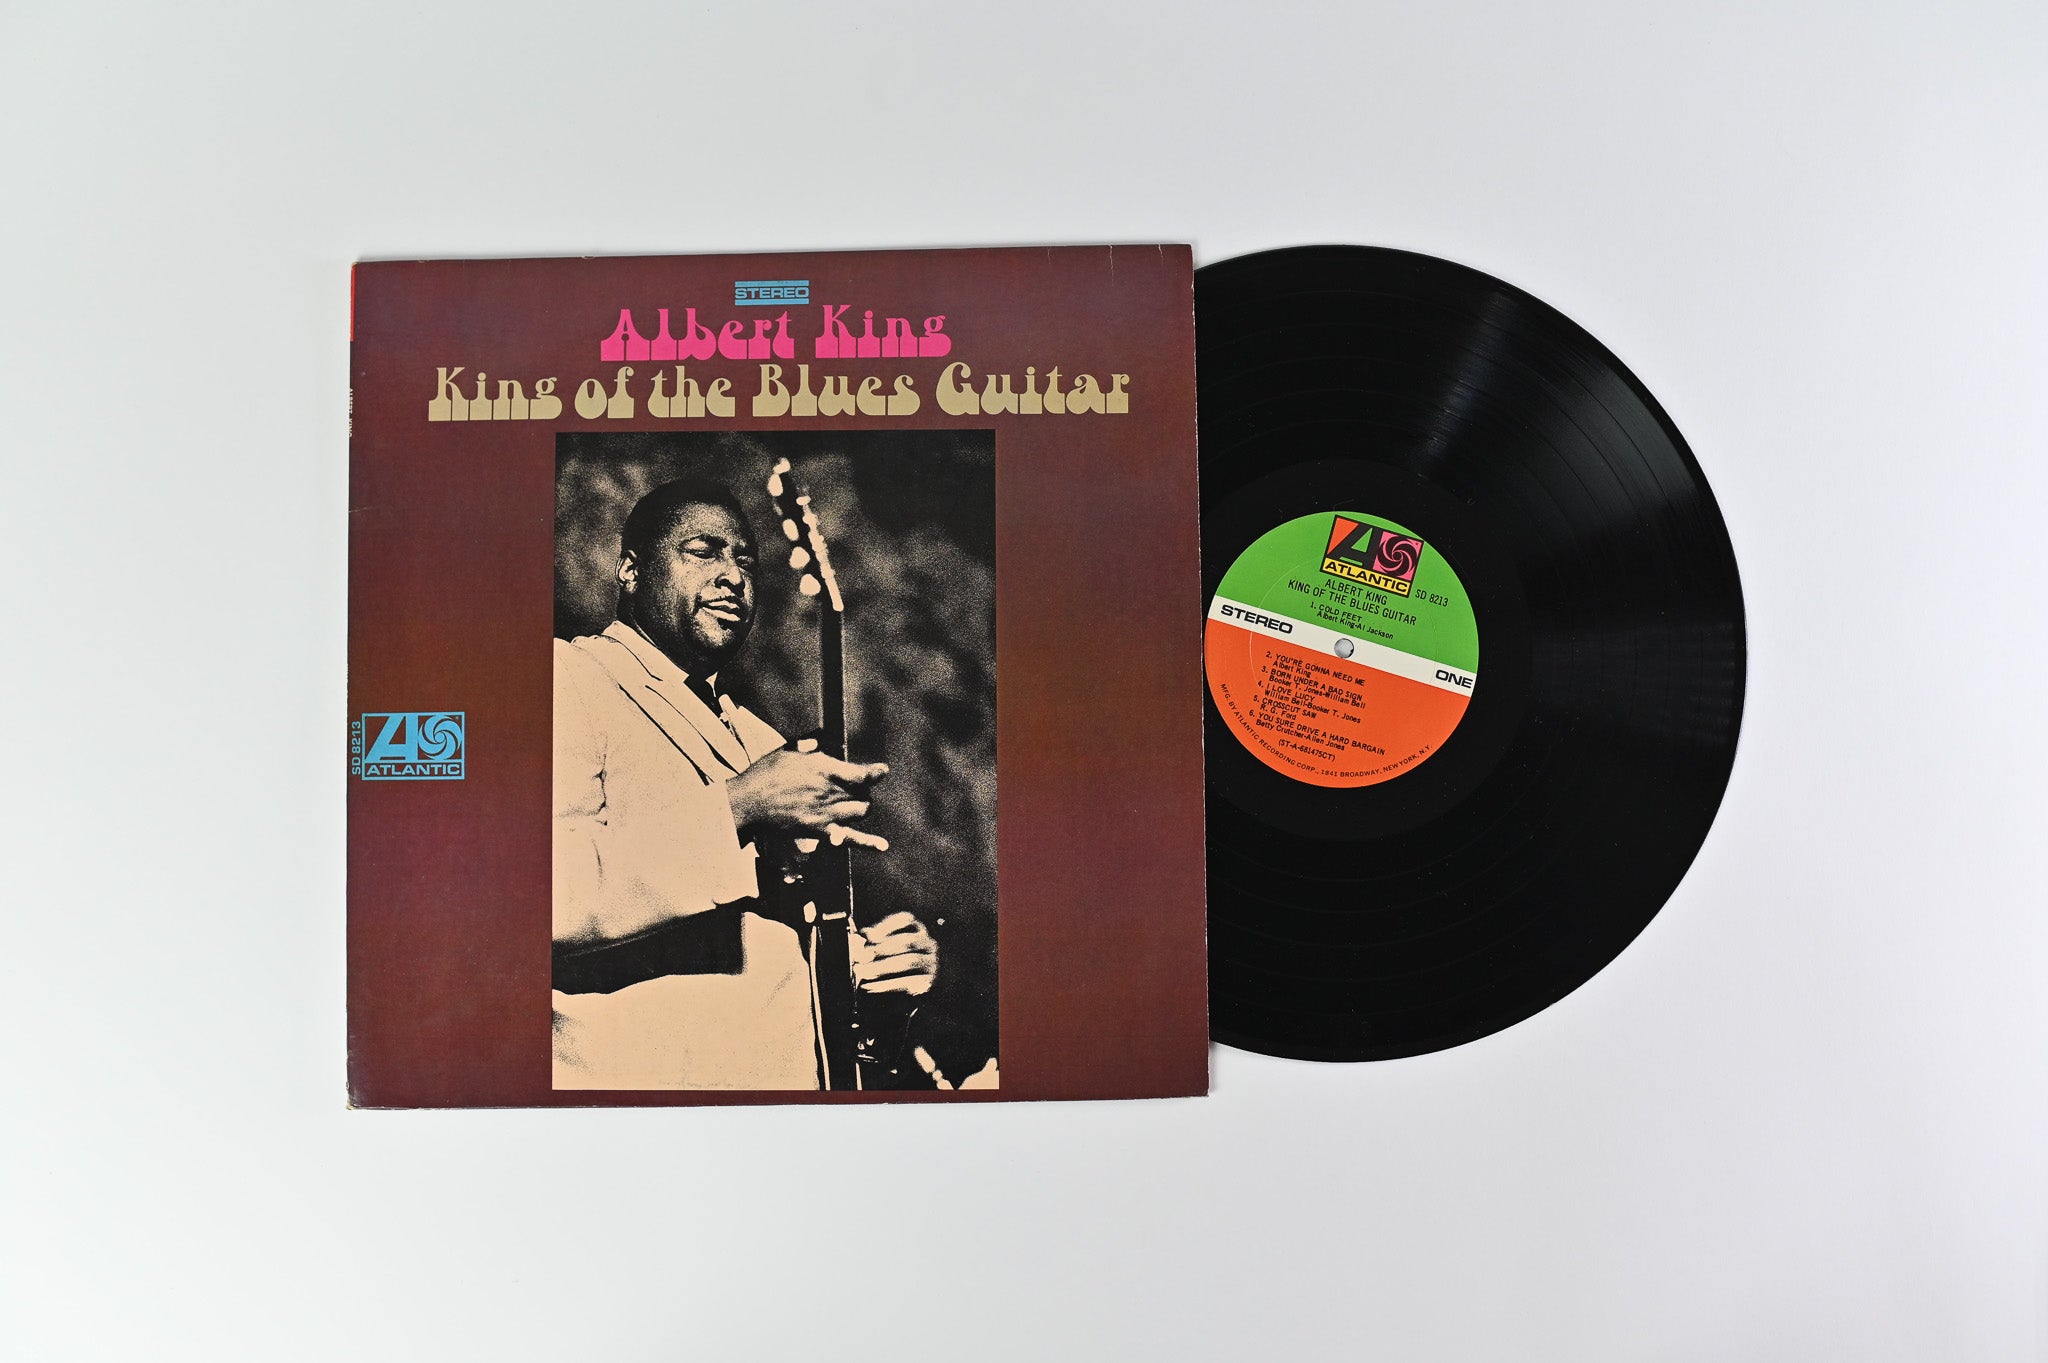 Albert King - King Of The Blues Guitar on Atlantic